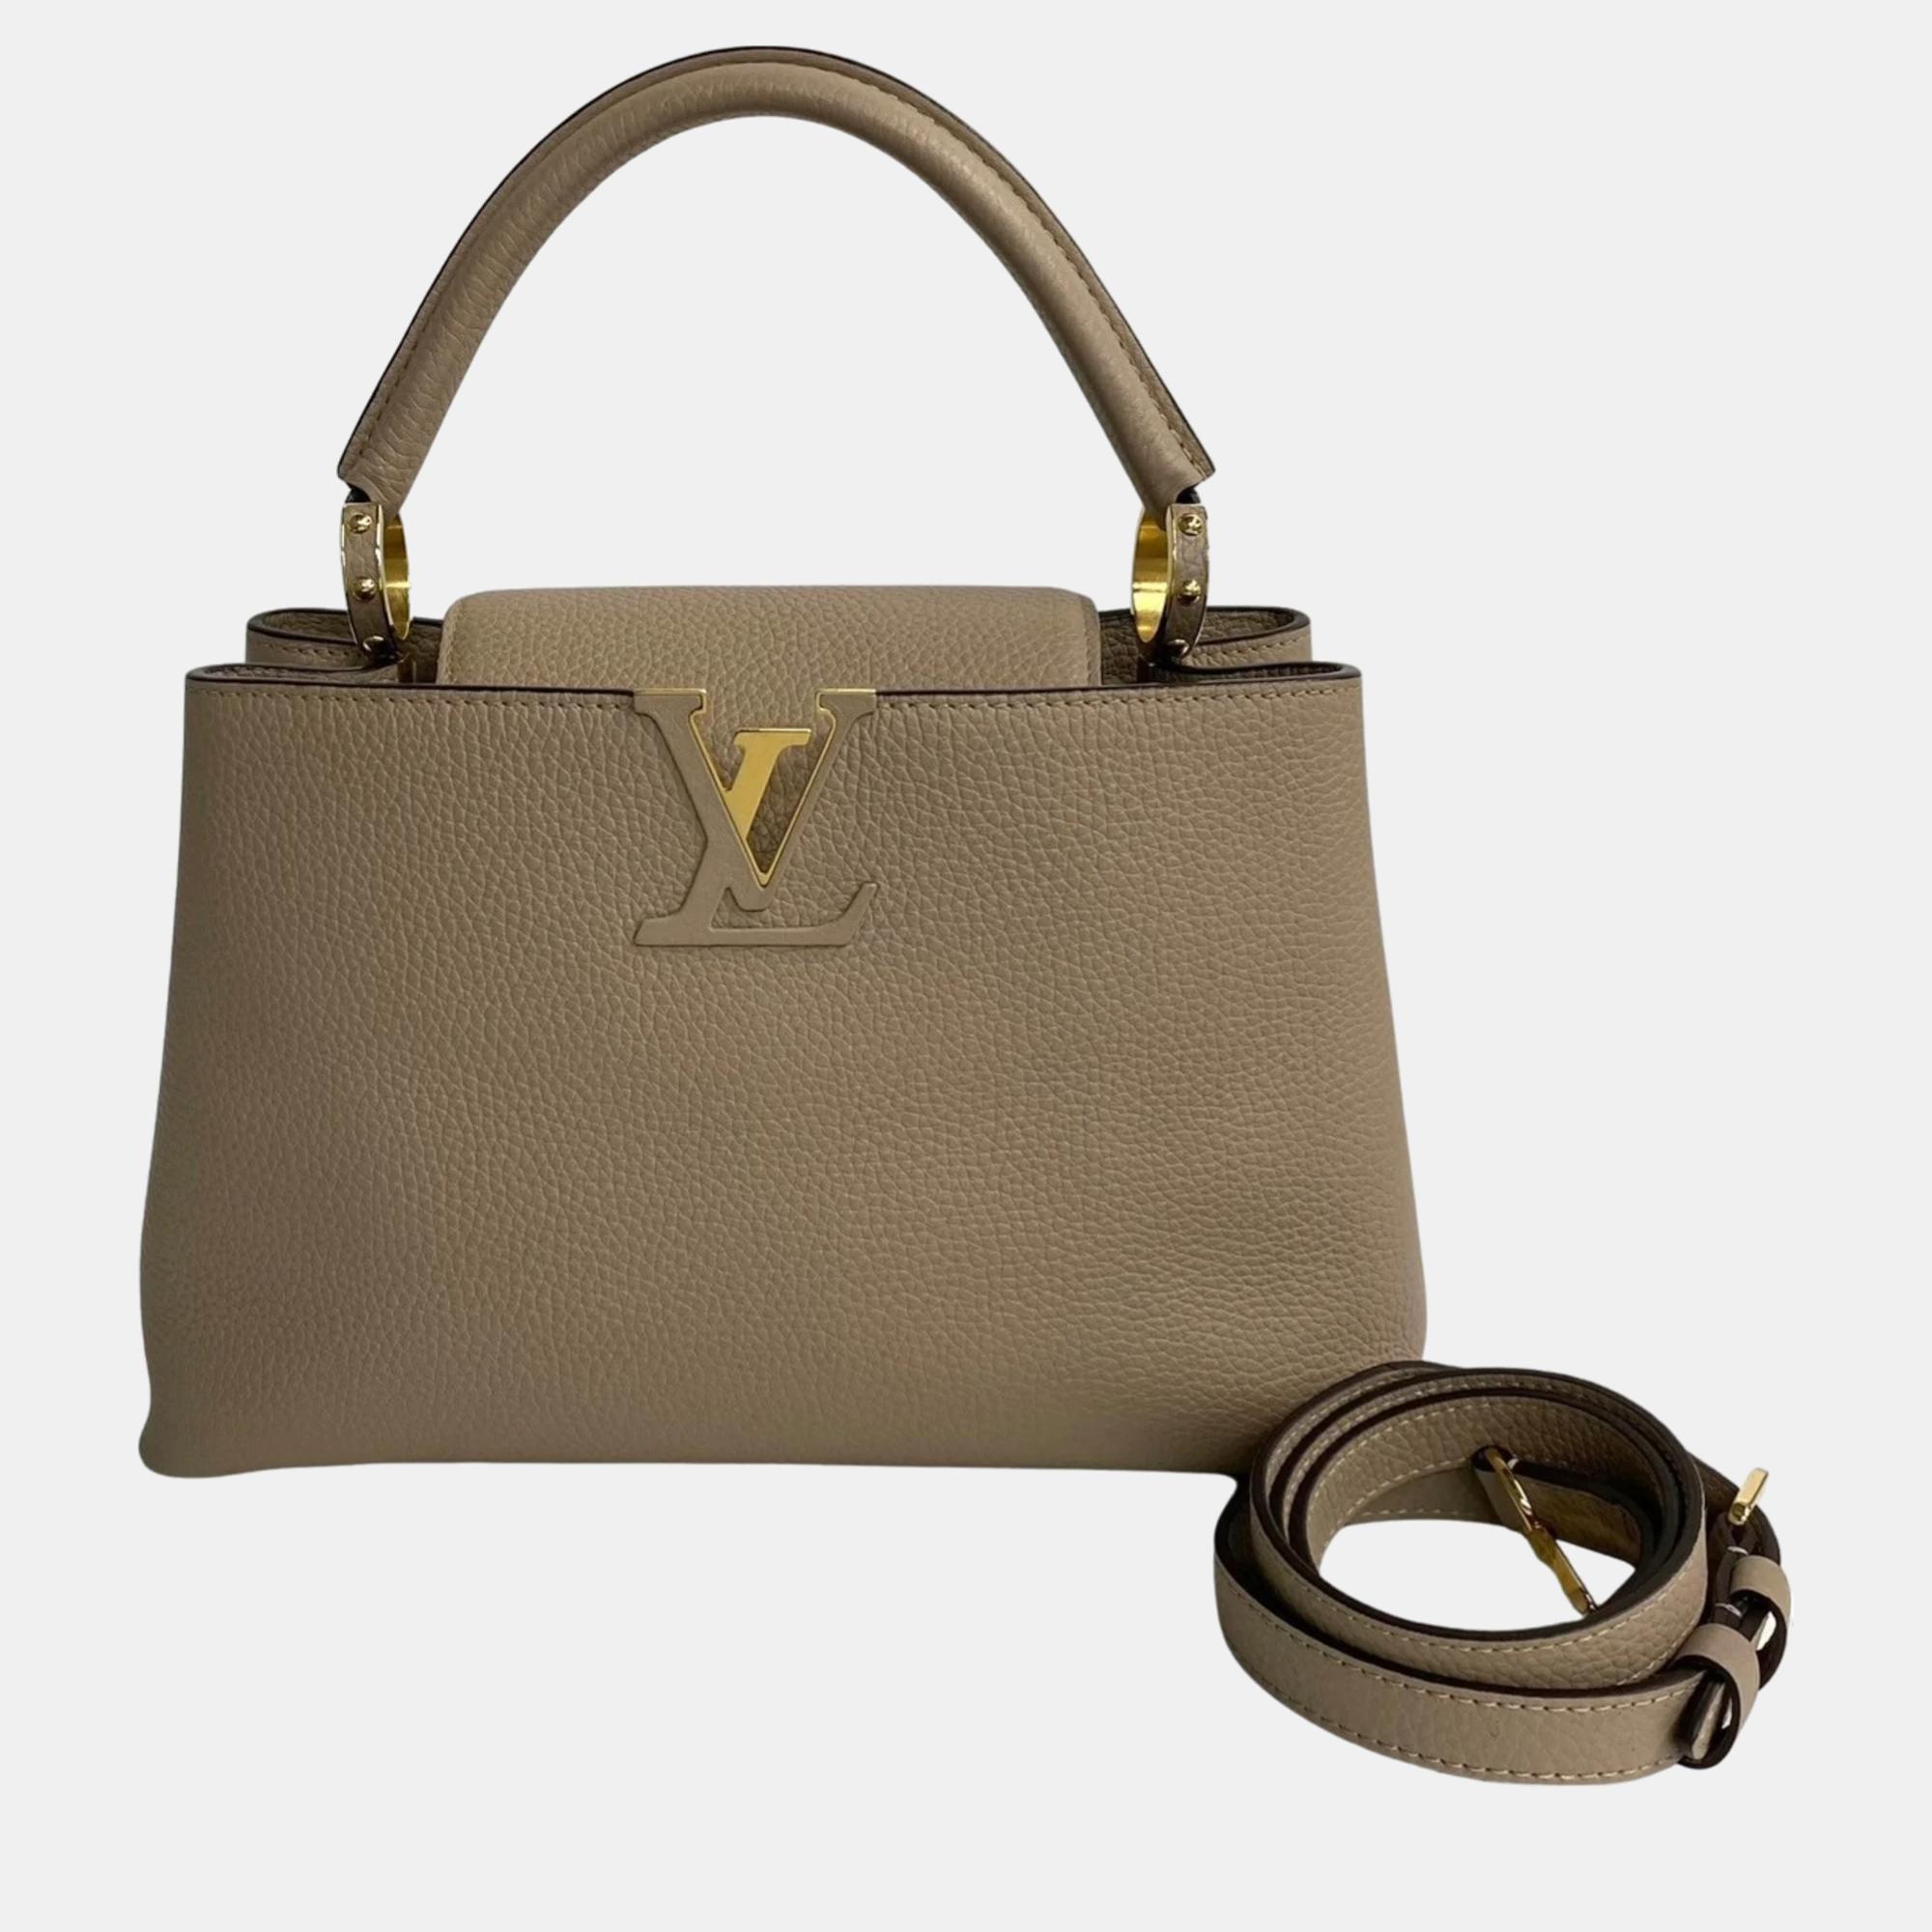 Louis vuitton beige leather medium capucines top handle bag